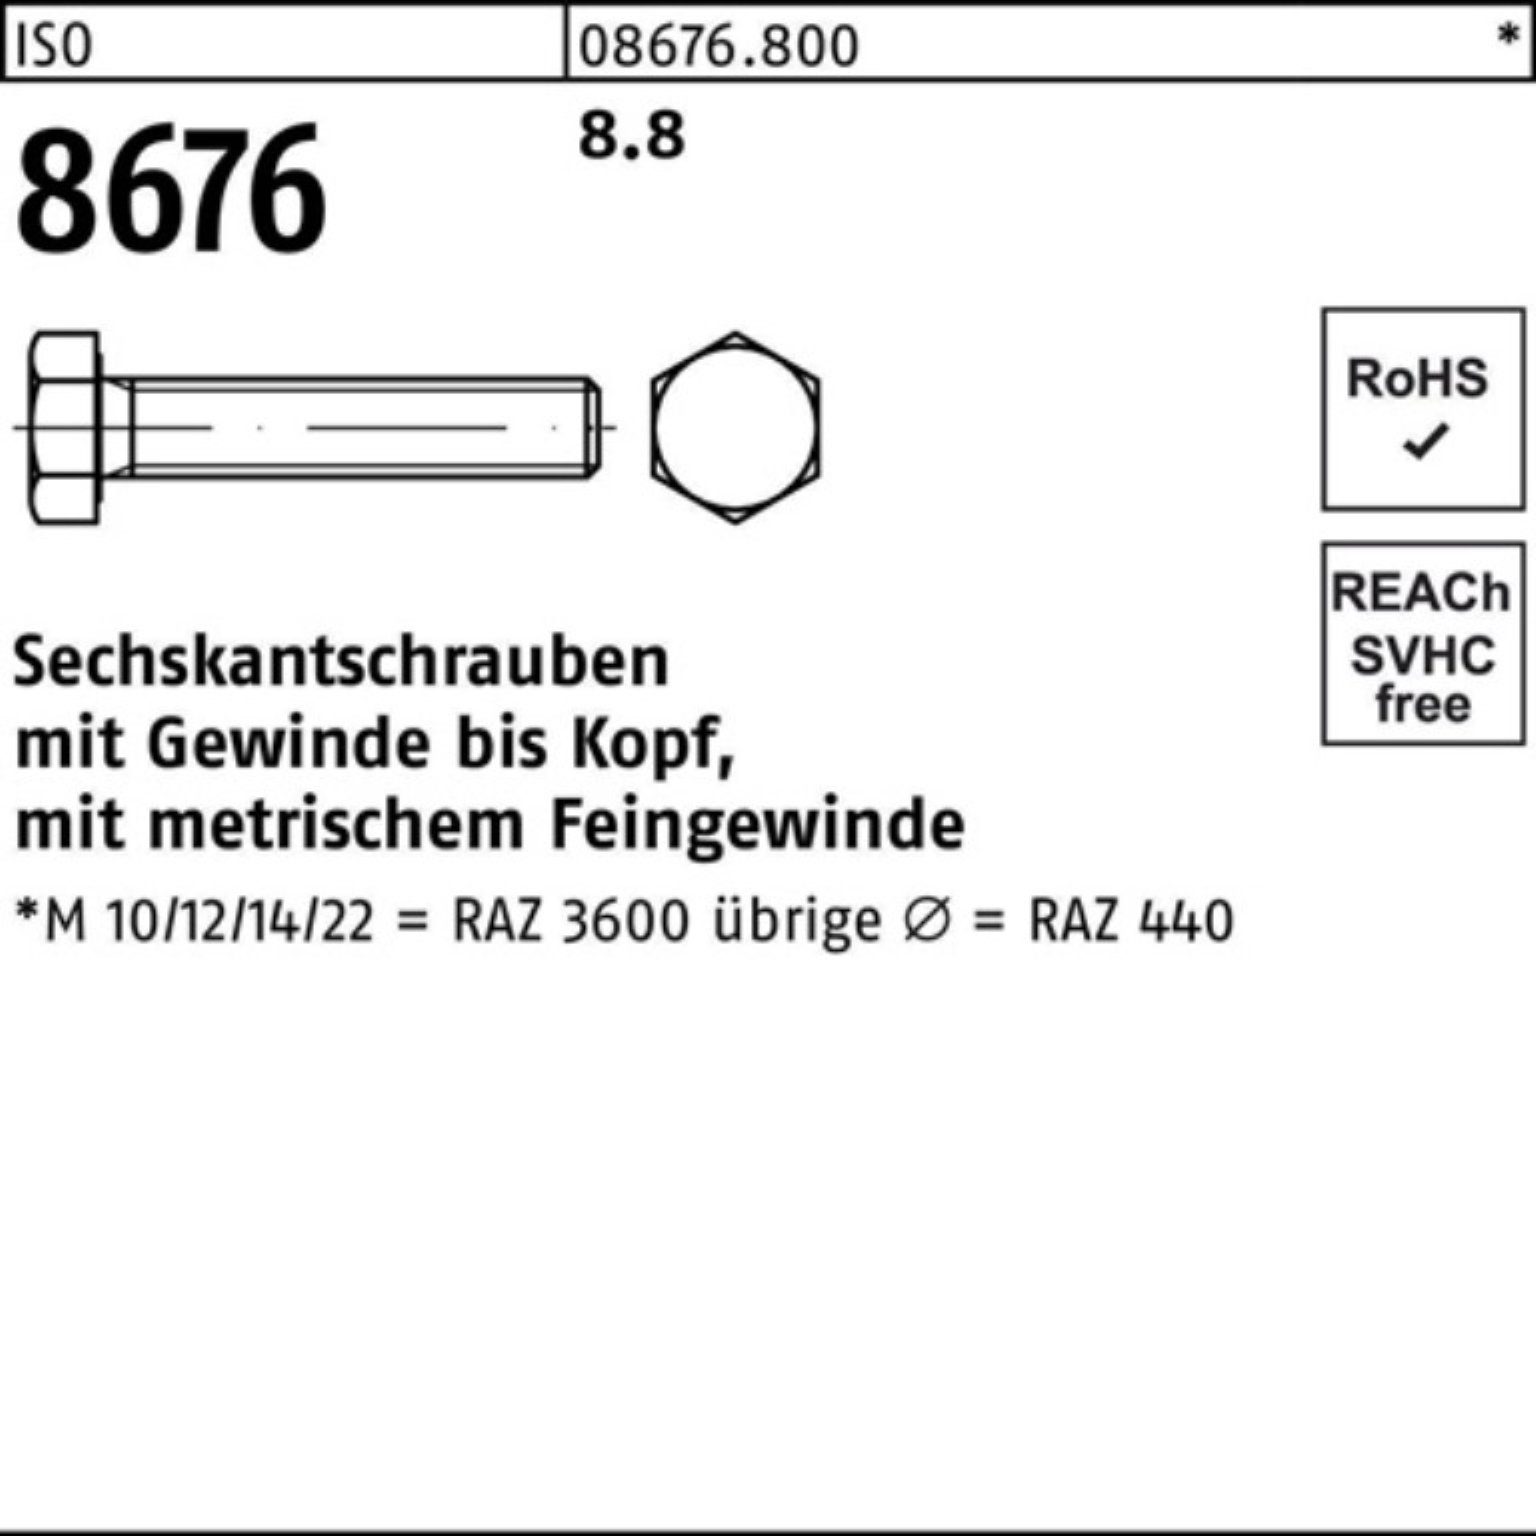 Reyher Pack 86 Stück Sechskantschraube M30x2x110 1 8676 Sechskantschraube 100er 8.8 VG ISO ISO